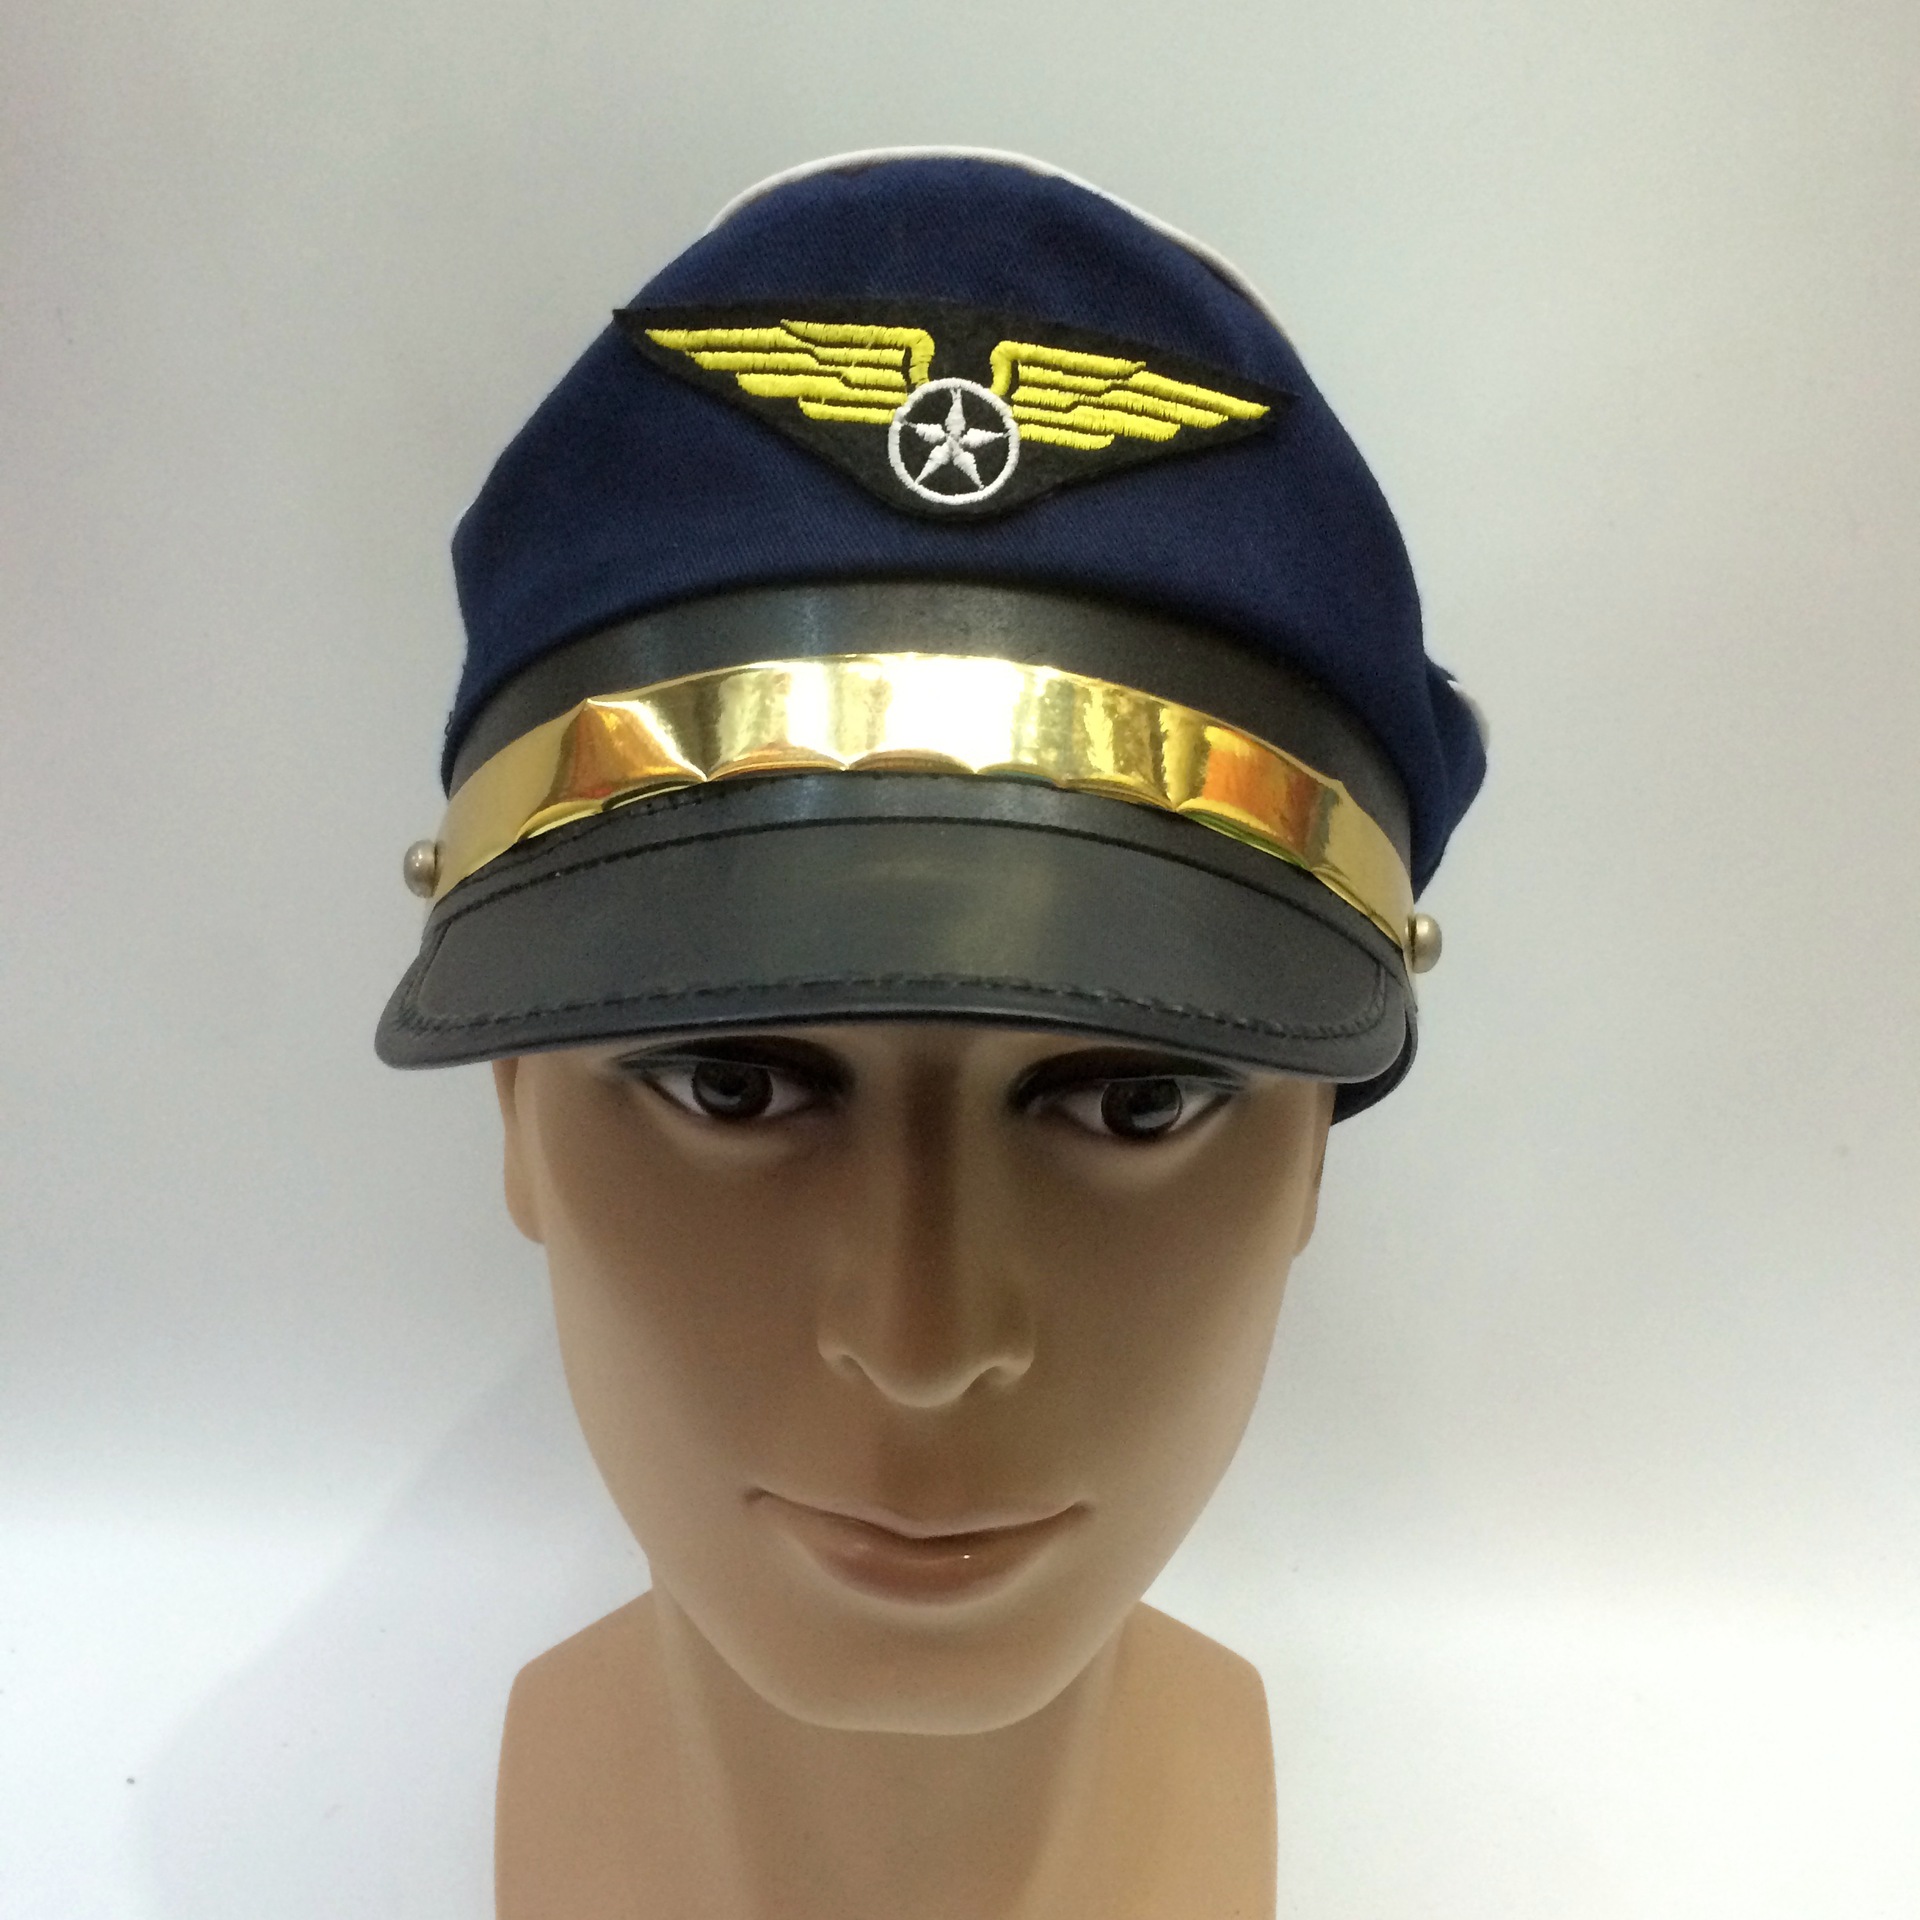 cosplay空军帽子 飞机长官帽子 外贸出口各类军人帽子